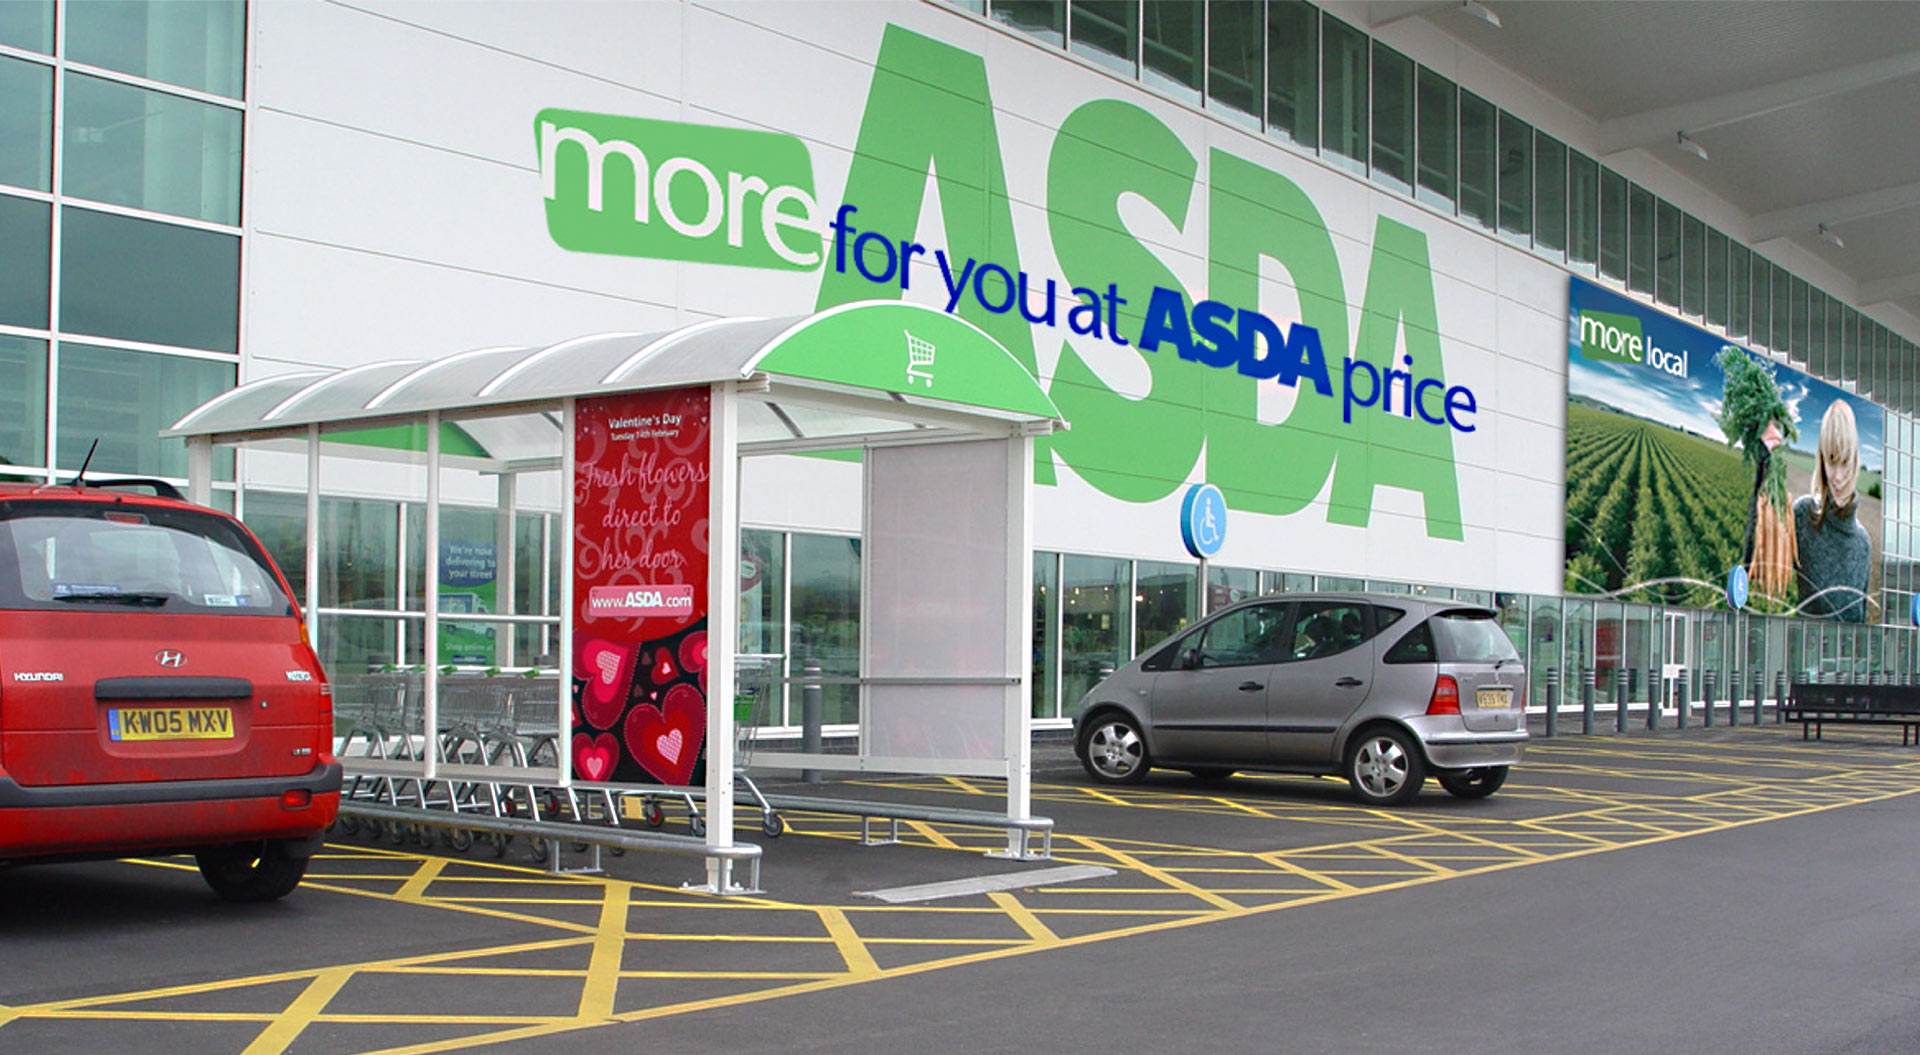 Asda marketing campaign concept more for you at Asda price store branding